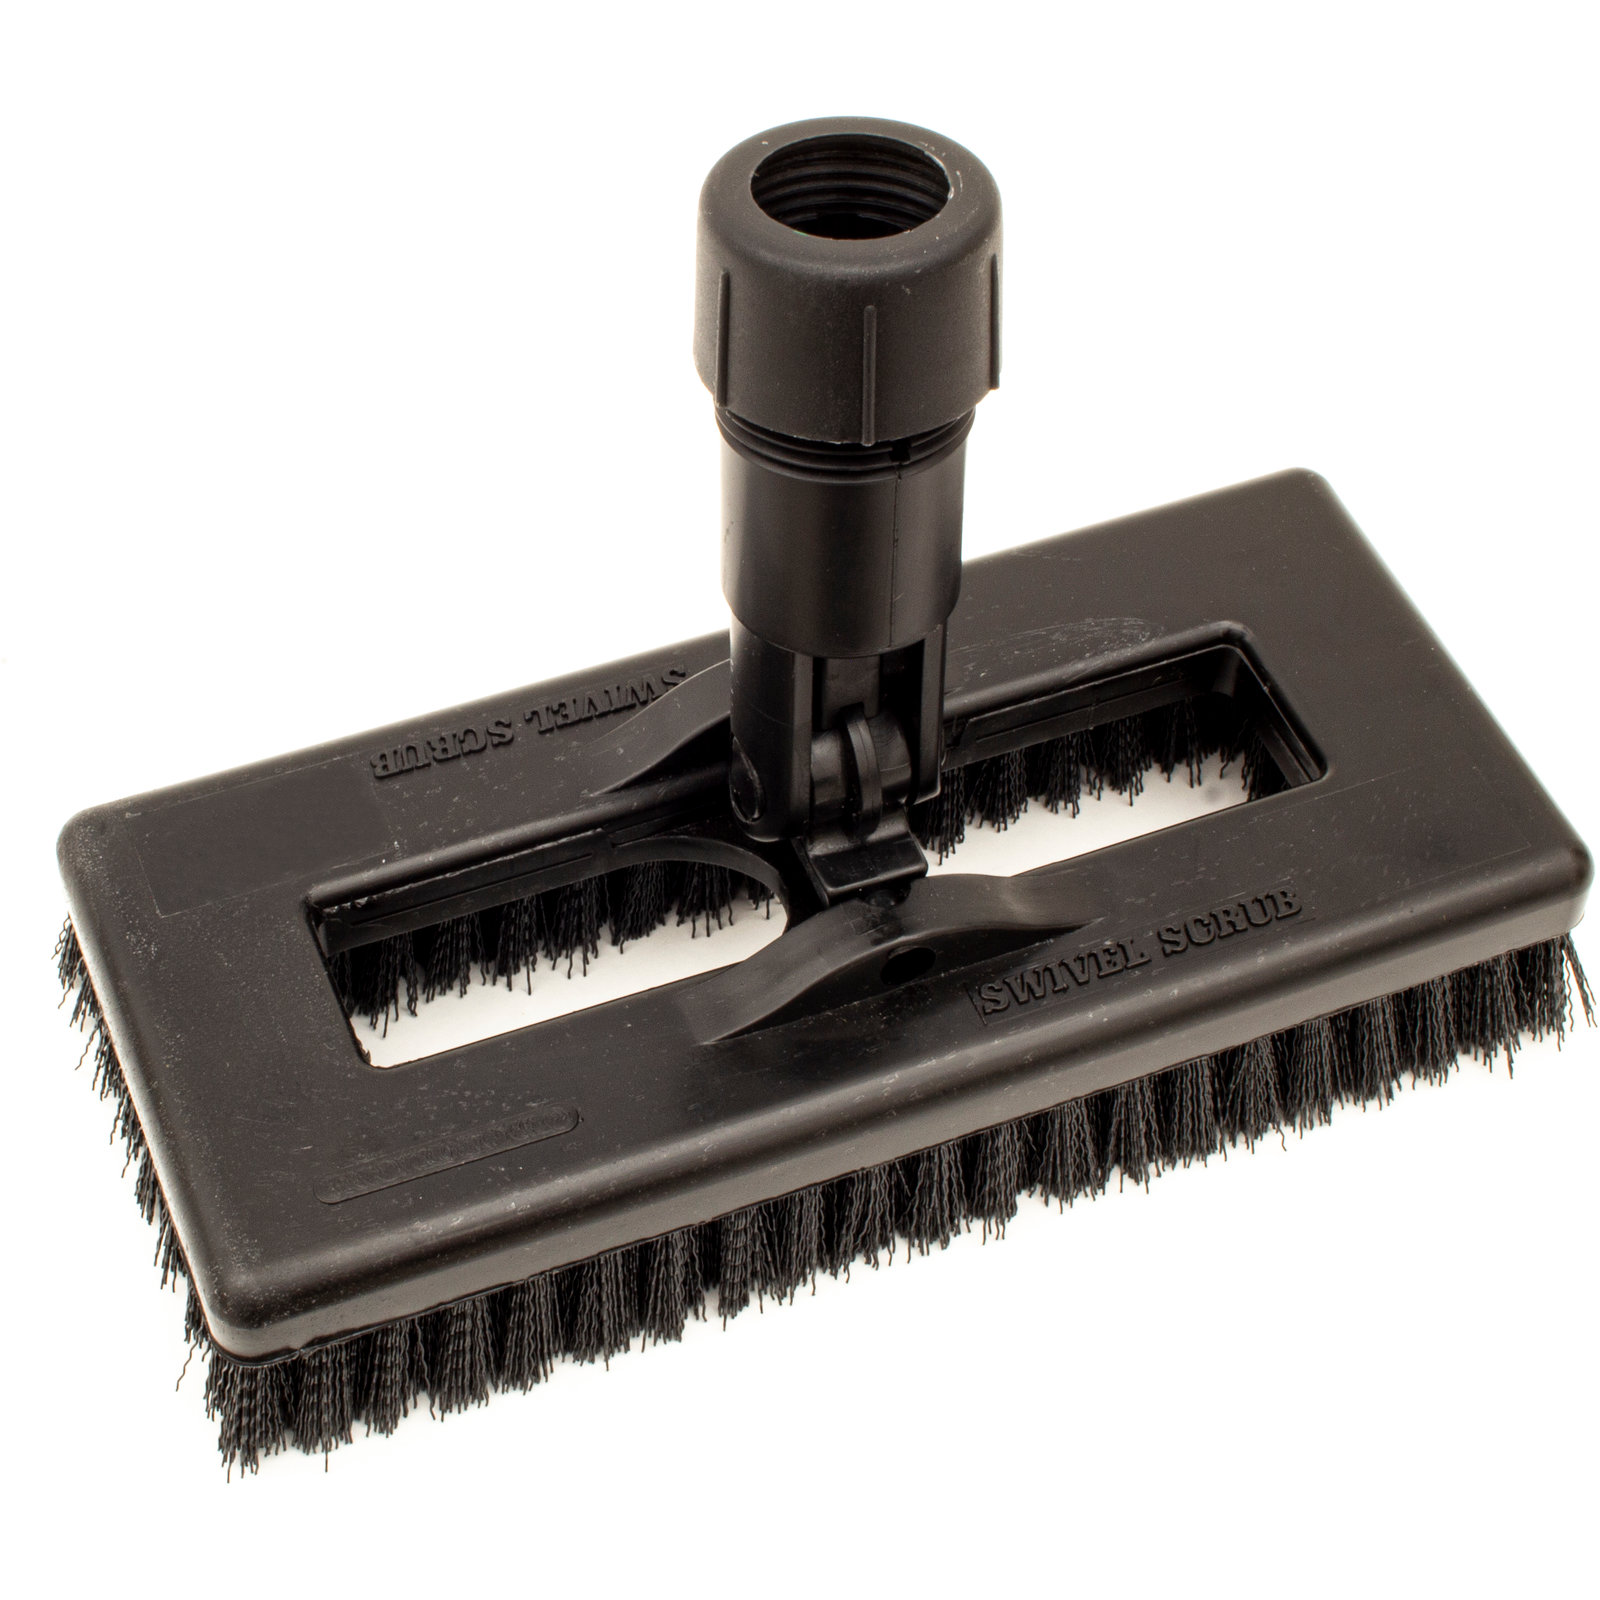 Choice 8 Black Polypropylene Utility / Pot Scrub Brush